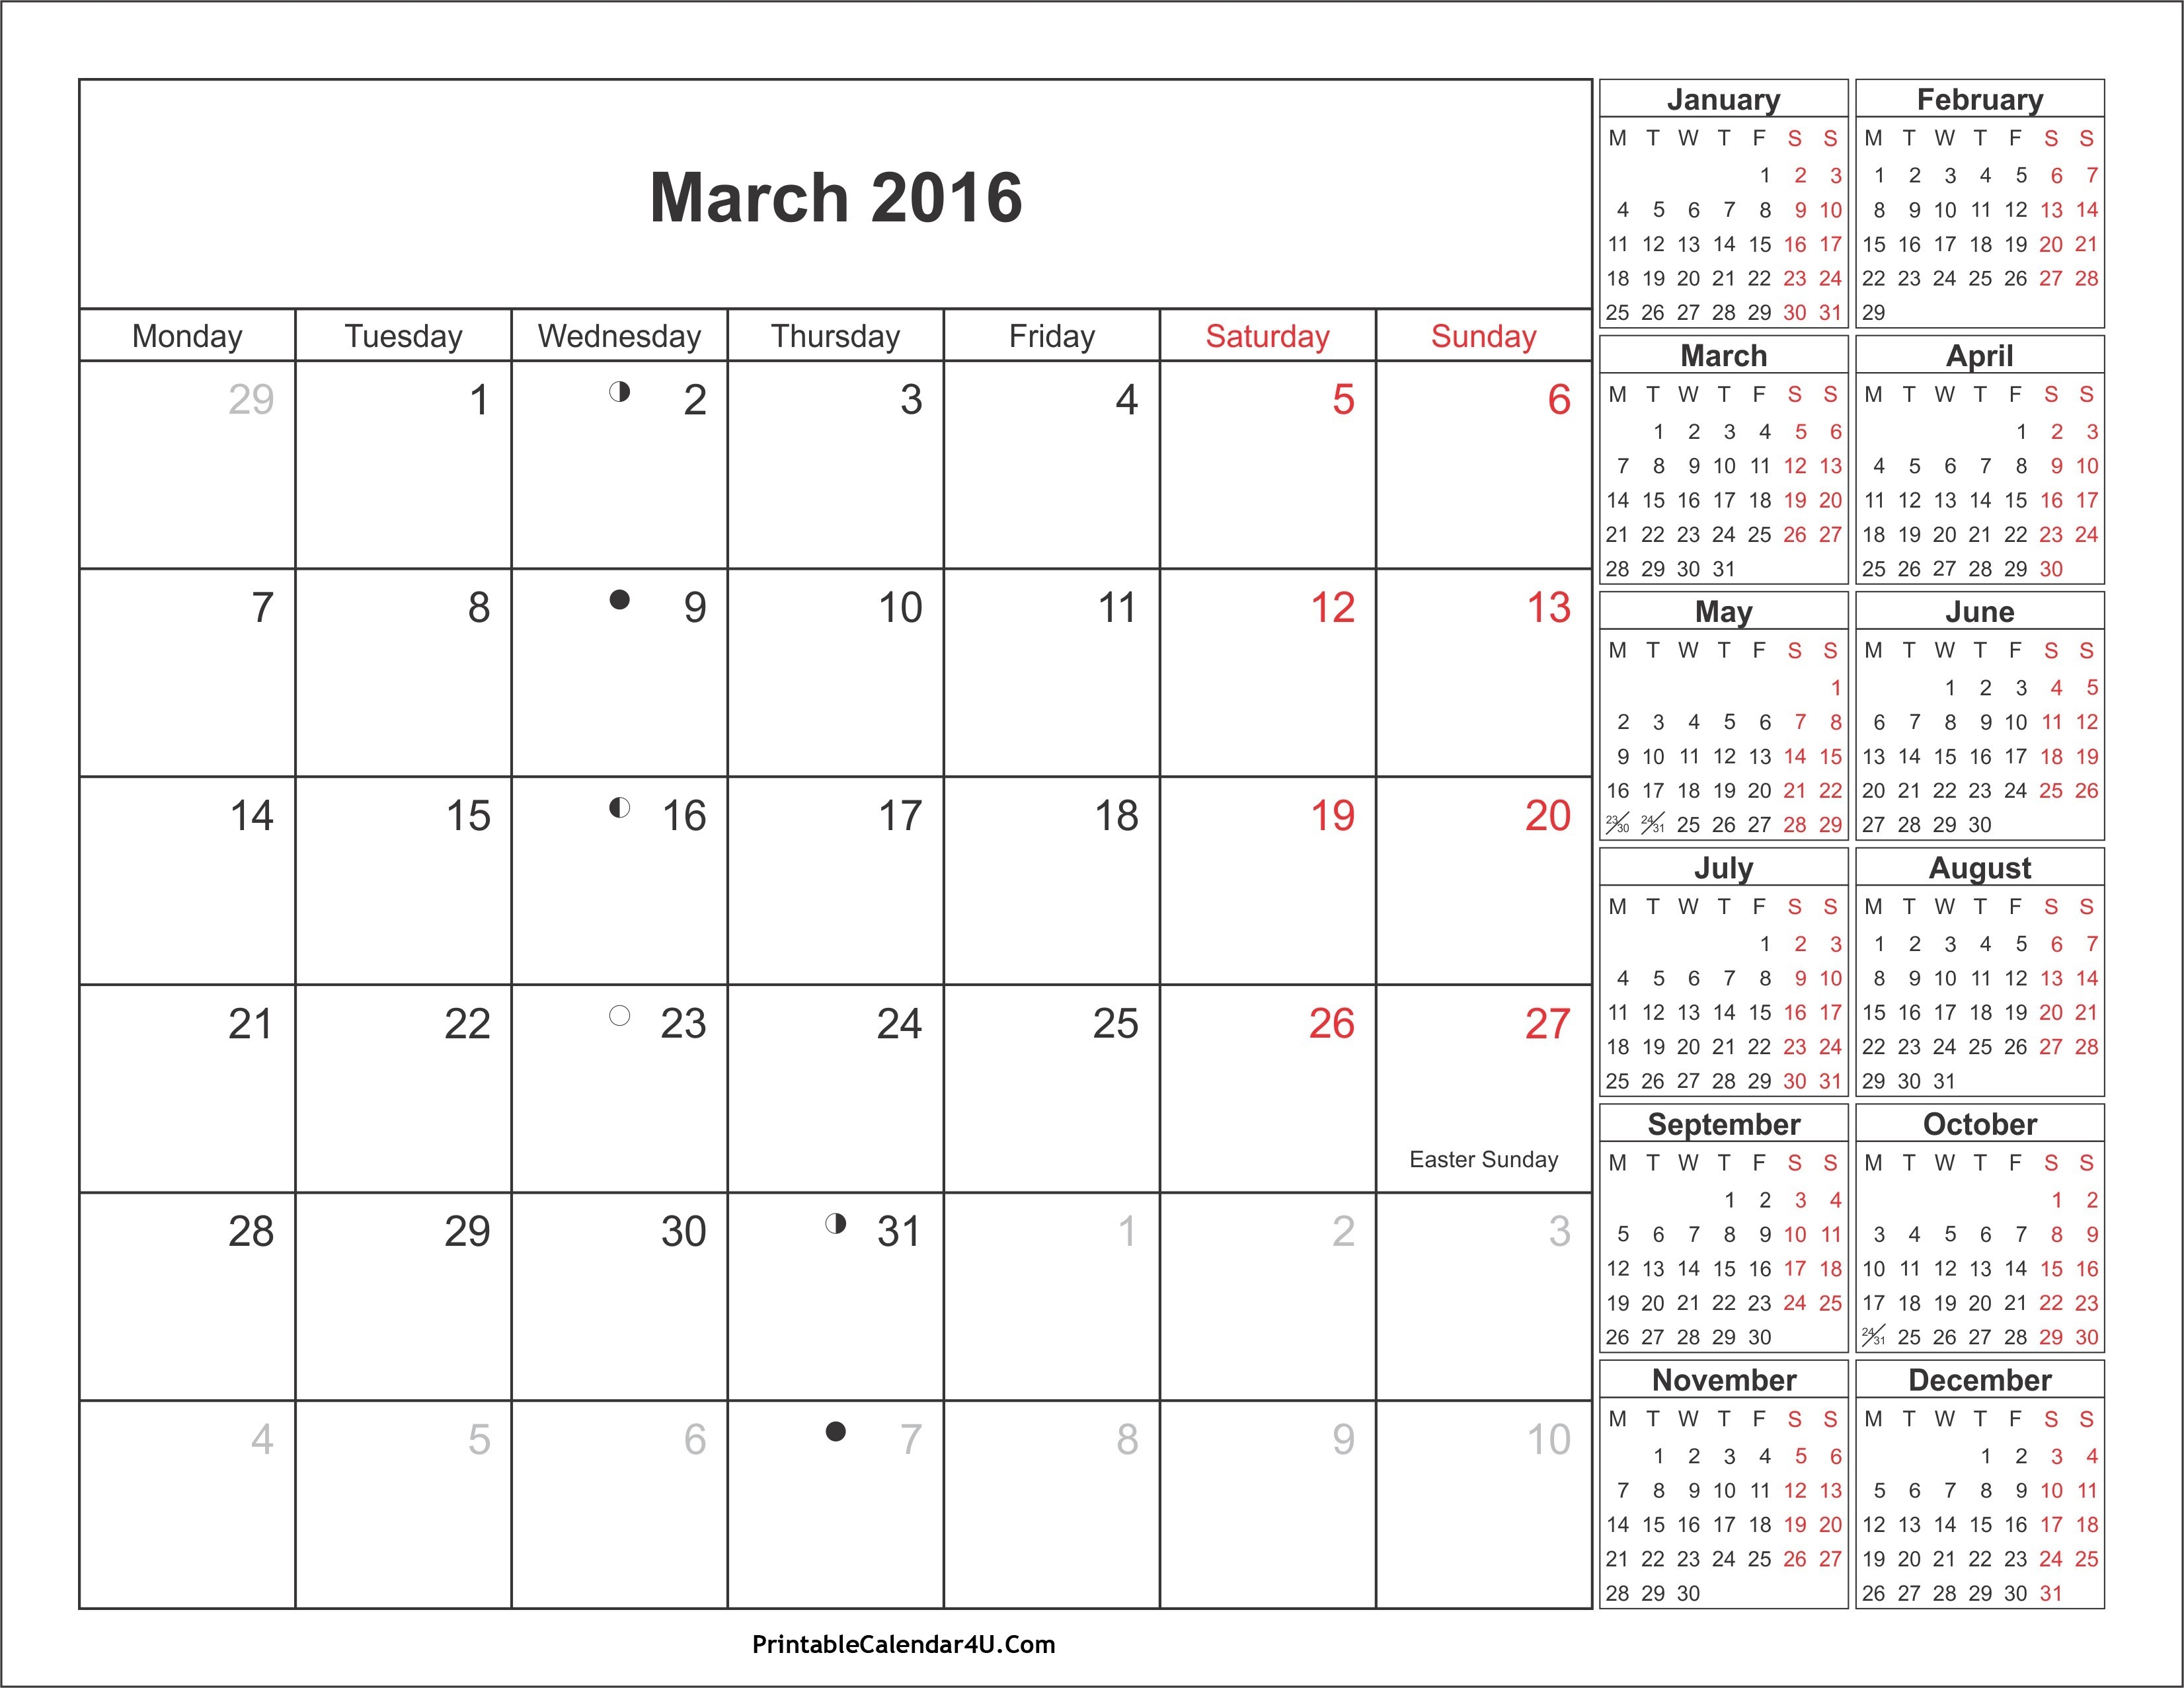 5 Year Calendar Of Jewish Holidays.pdf Printed For 100-Calandar Print Jewish Holidays